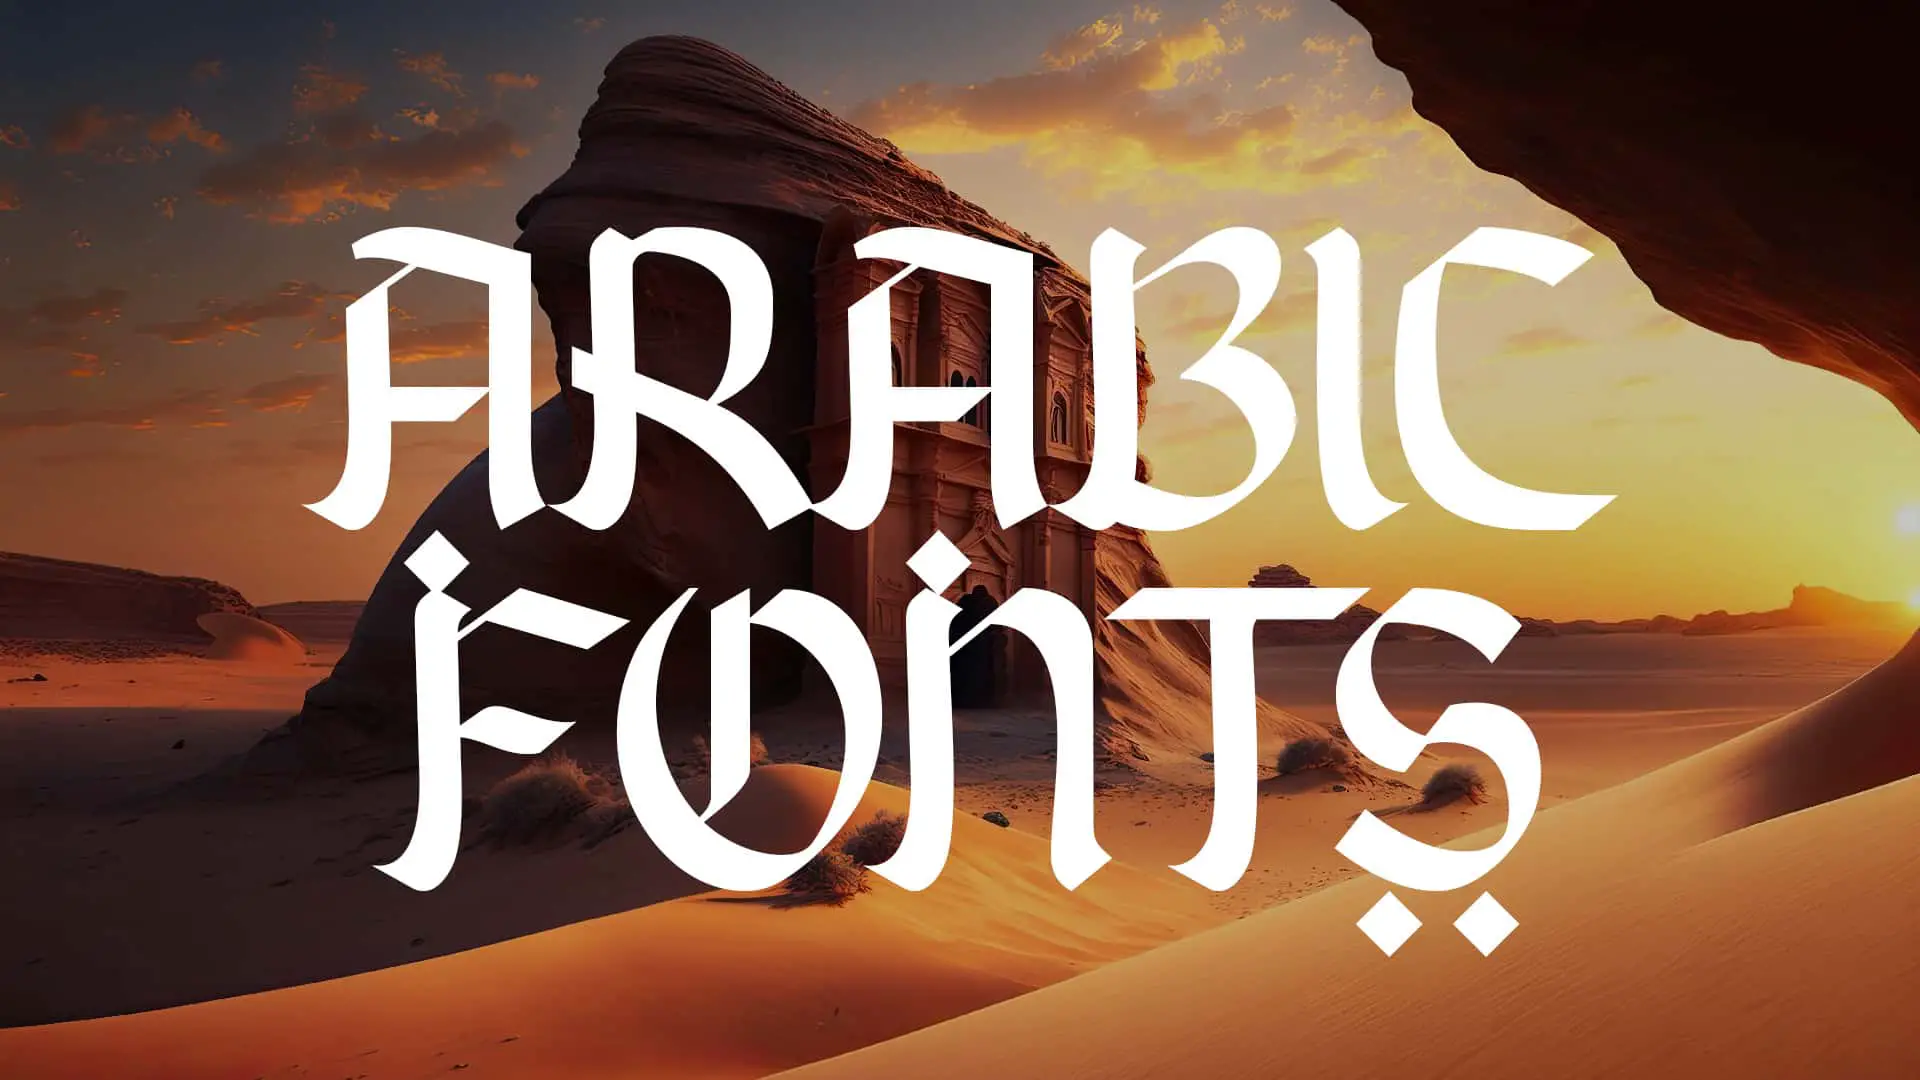 Best Arabic font design for iPhone